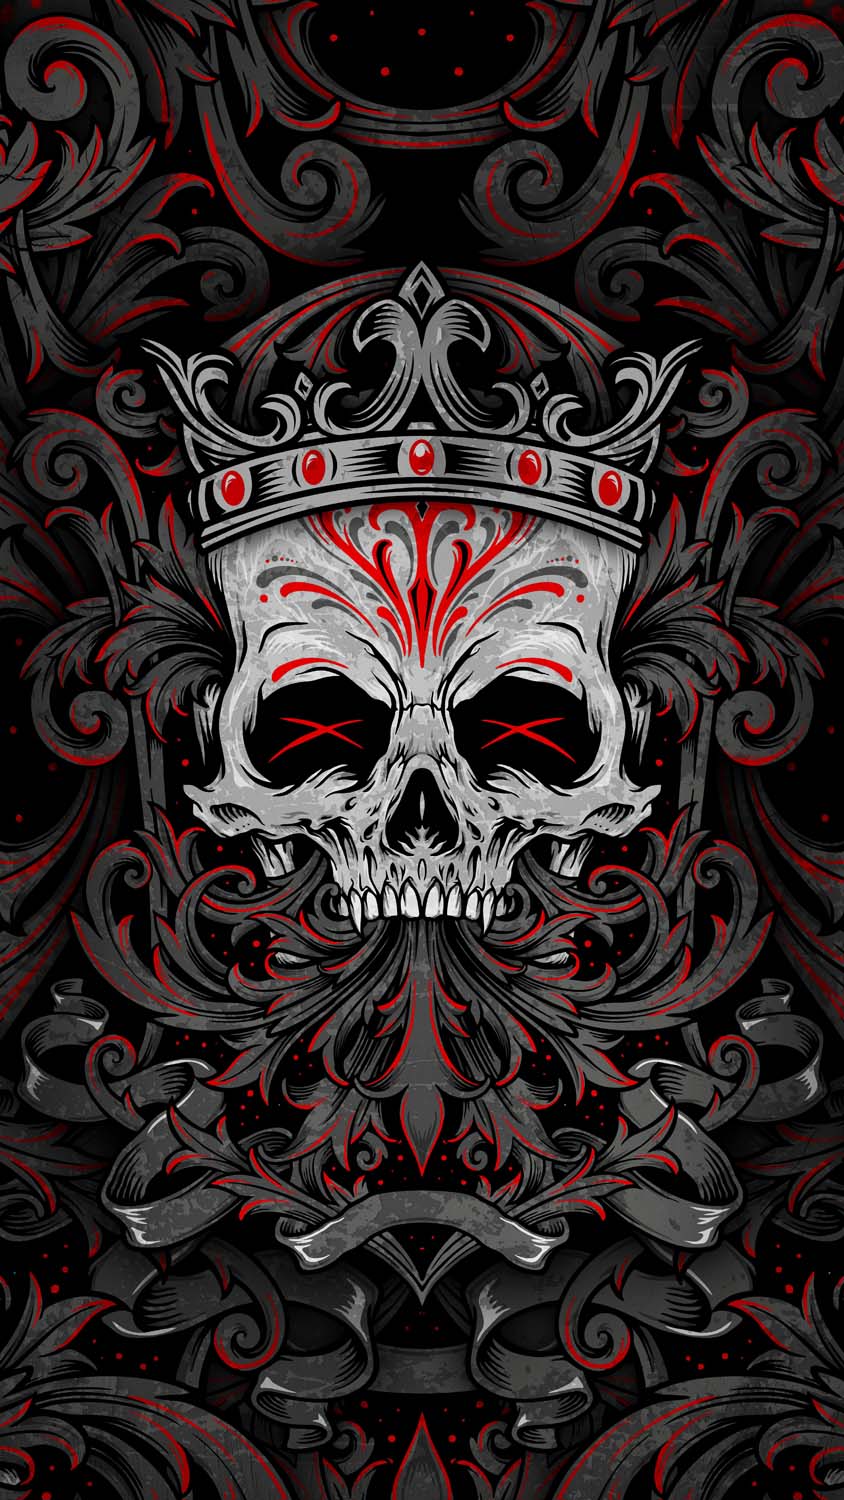 Skull King Design IPhone Wallpaper HD - IPhone Wallpapers : iPhone  Wallpapers